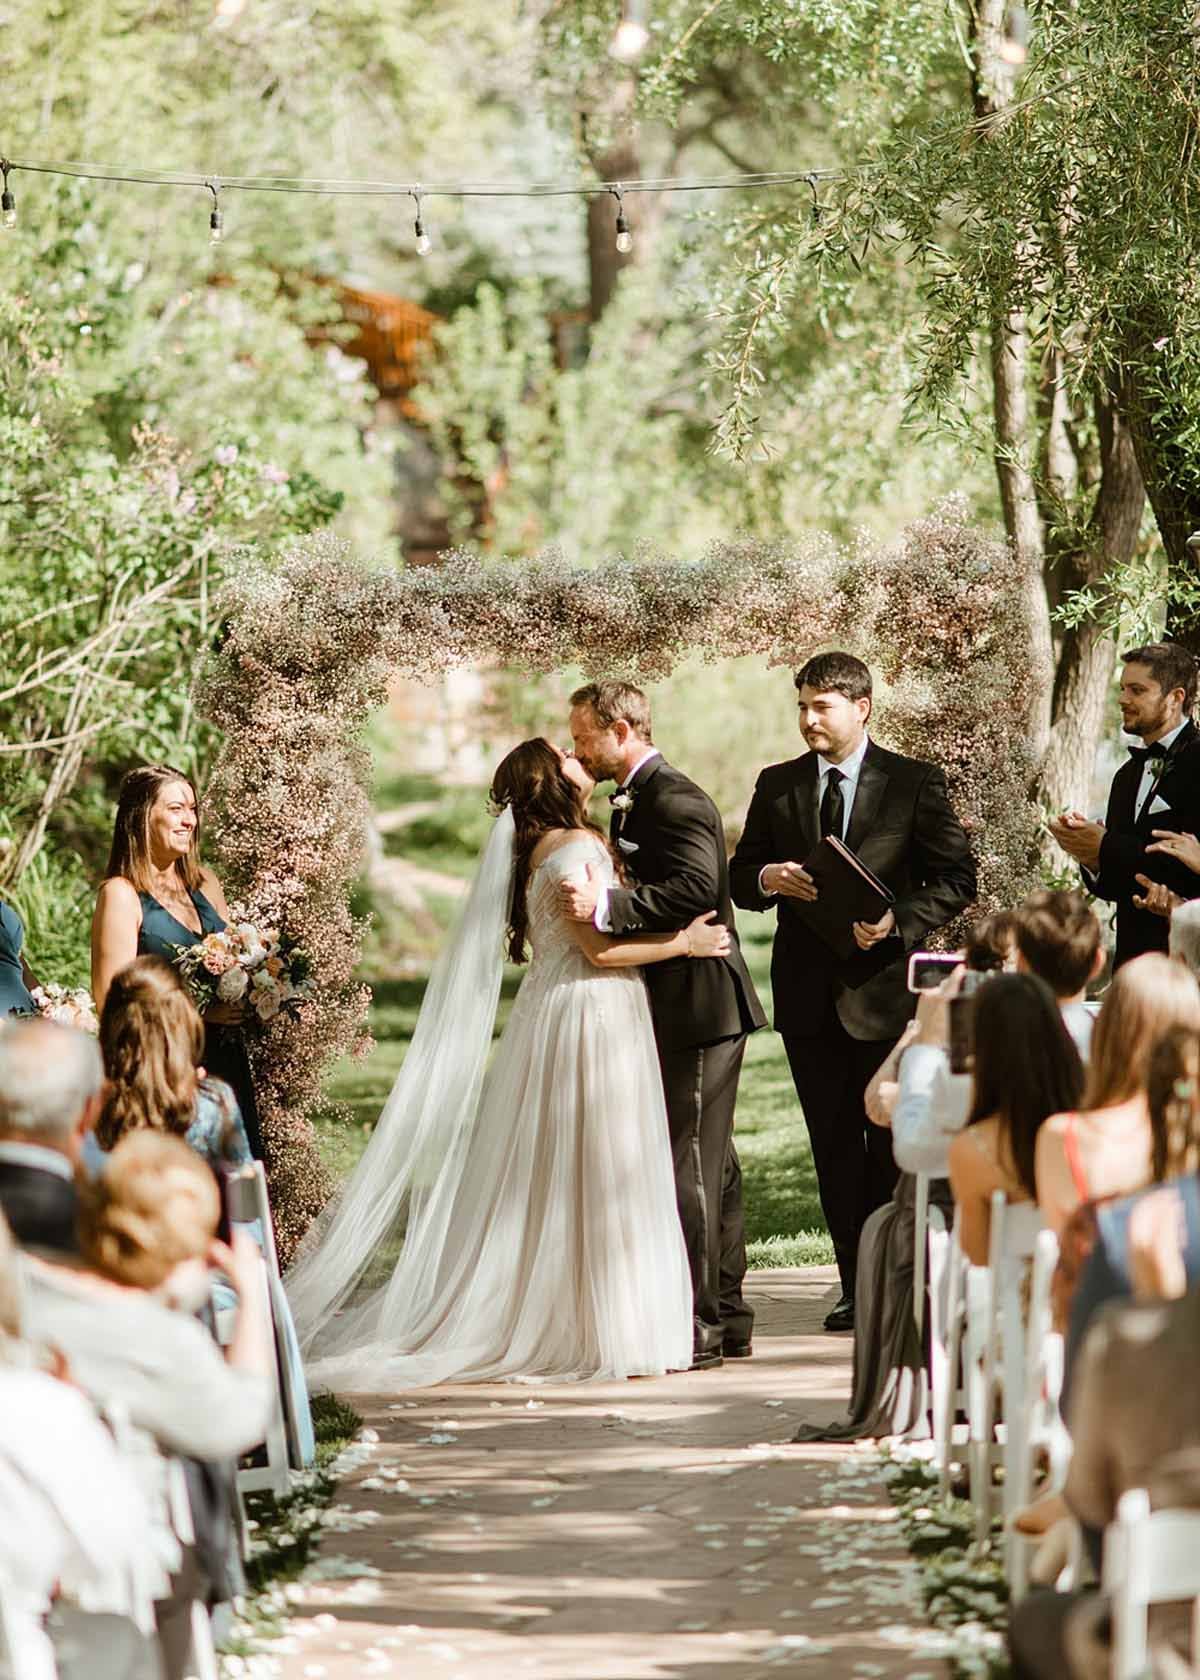 Romantic Summer Wedding at Boulder Creek: A Woodland Love Story